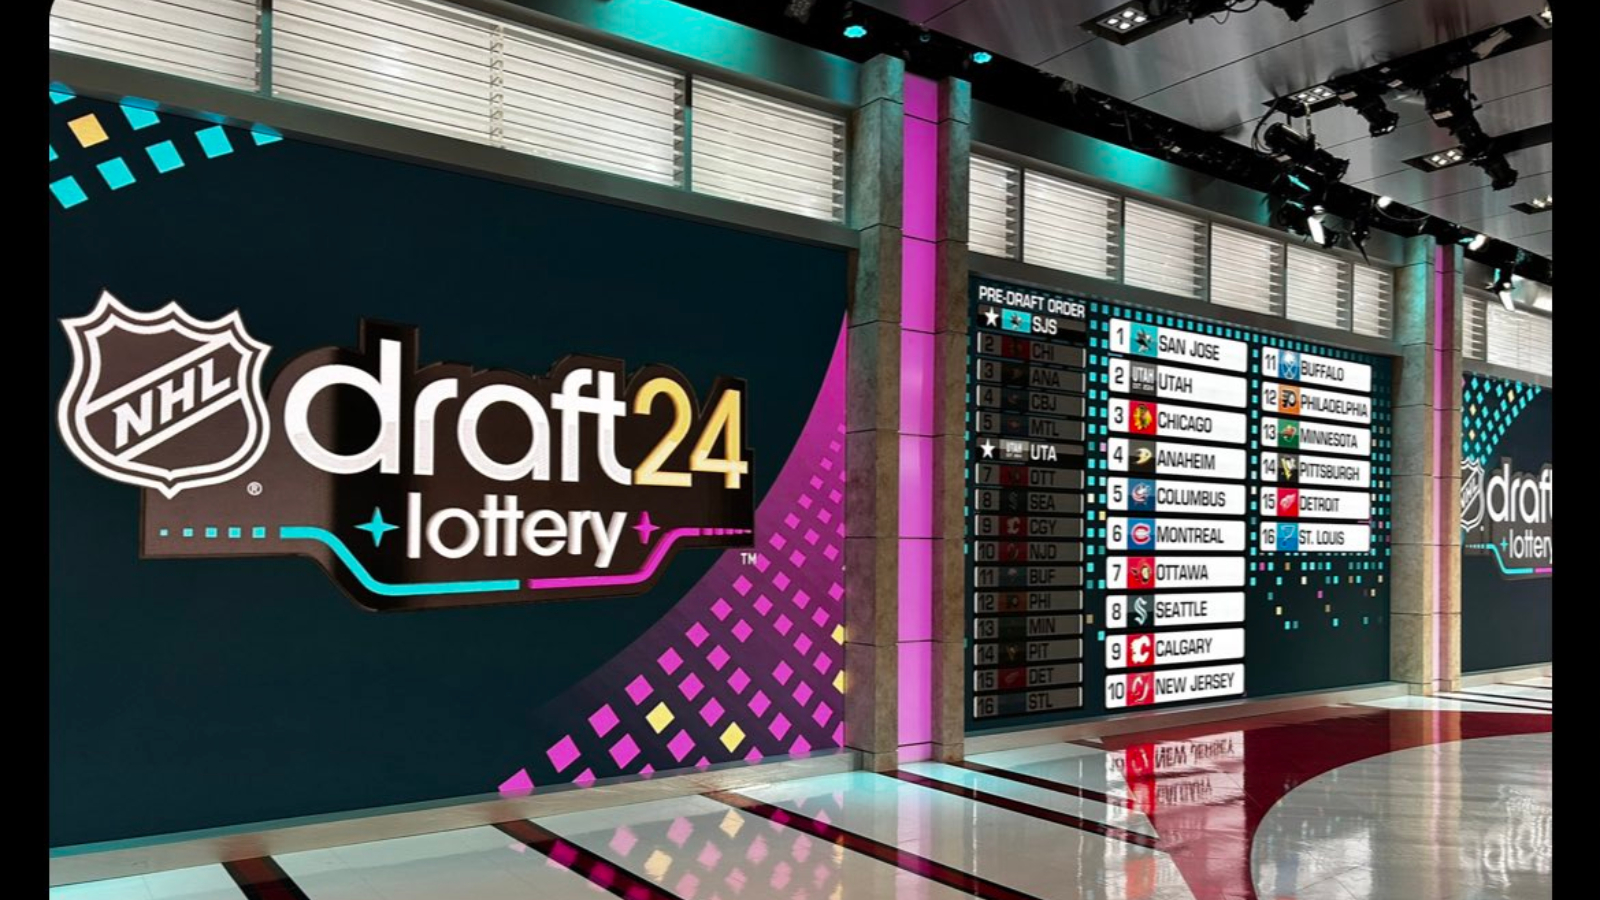 nhl draft lottery odds        <h3 class=